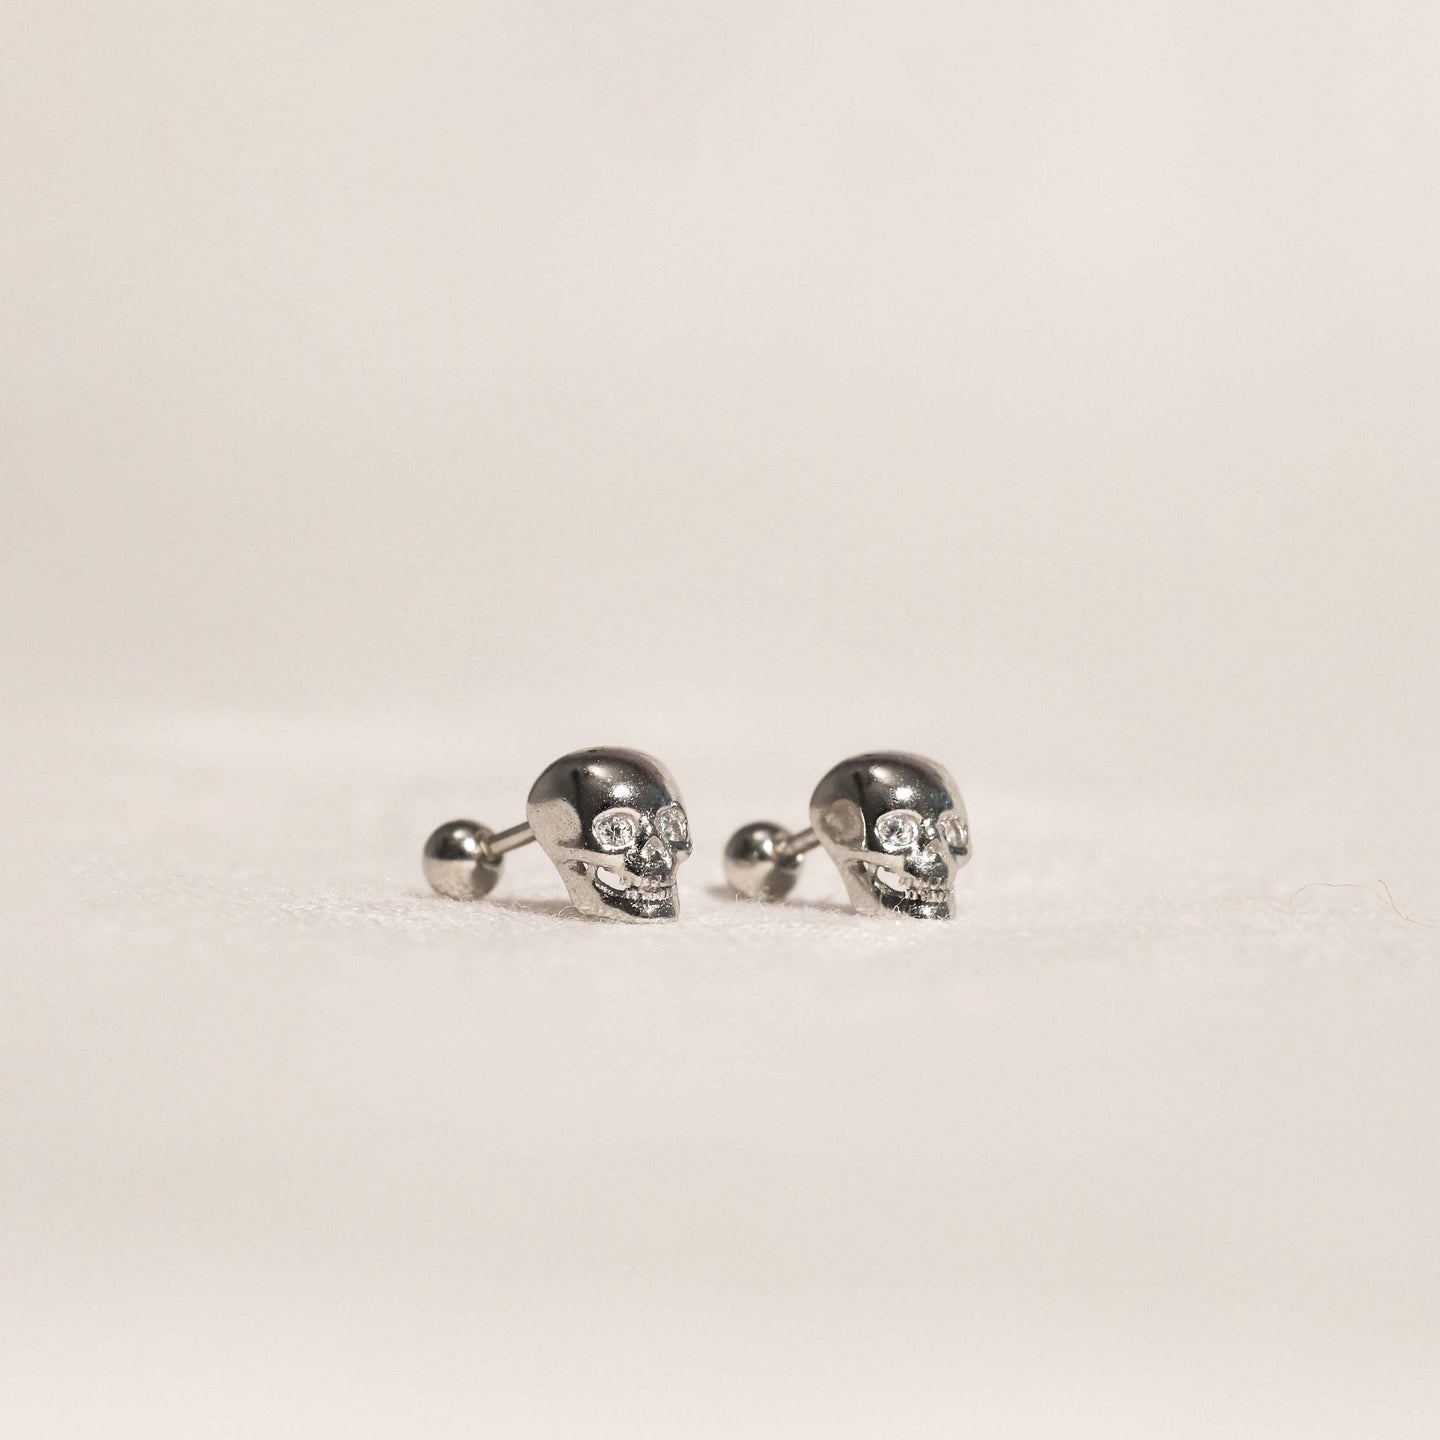 products/skala-cz-stud-earrings-925-sterling-silver-1.jpg